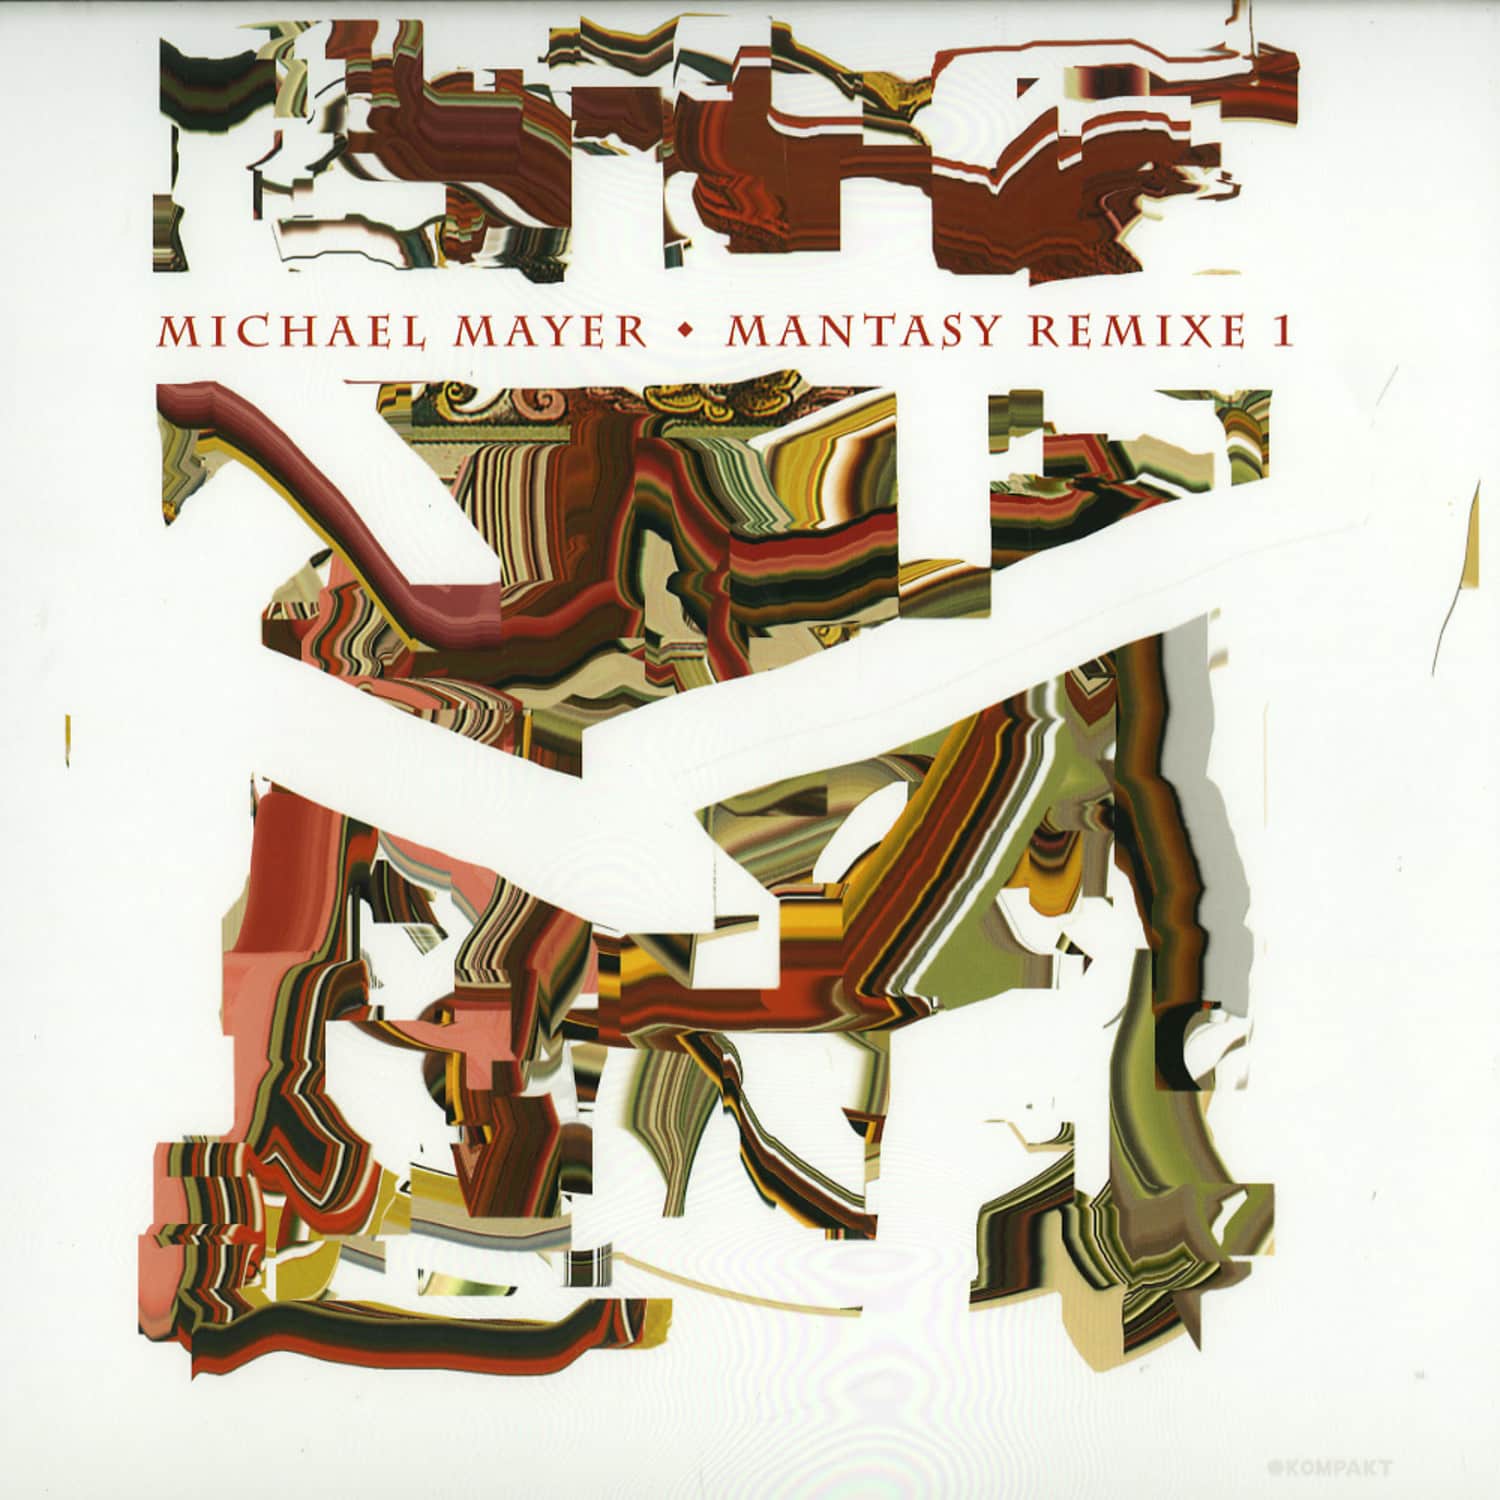 Michael Mayer - MANTASY REMIXE 1